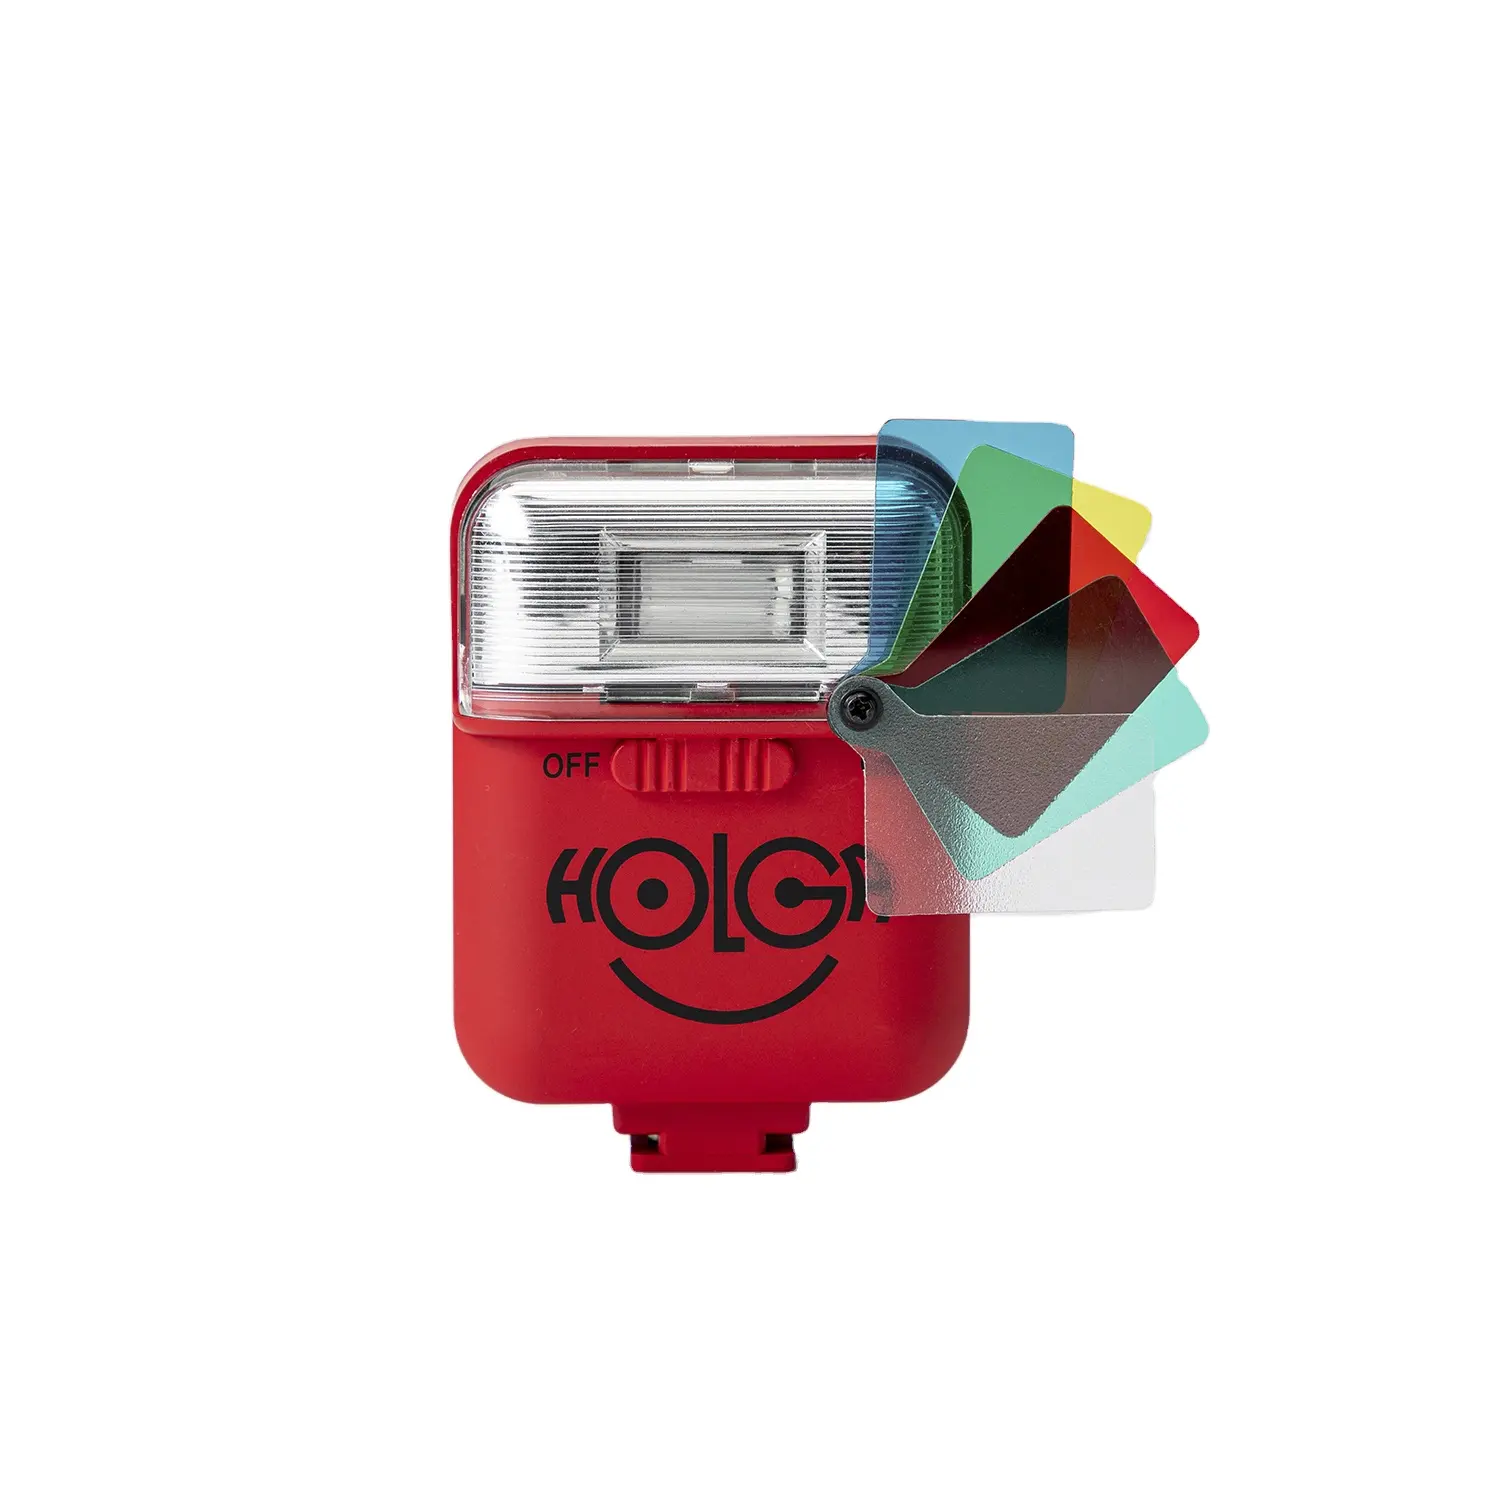 Holga 12MFC Five-color filter with hot shoe camera Flash